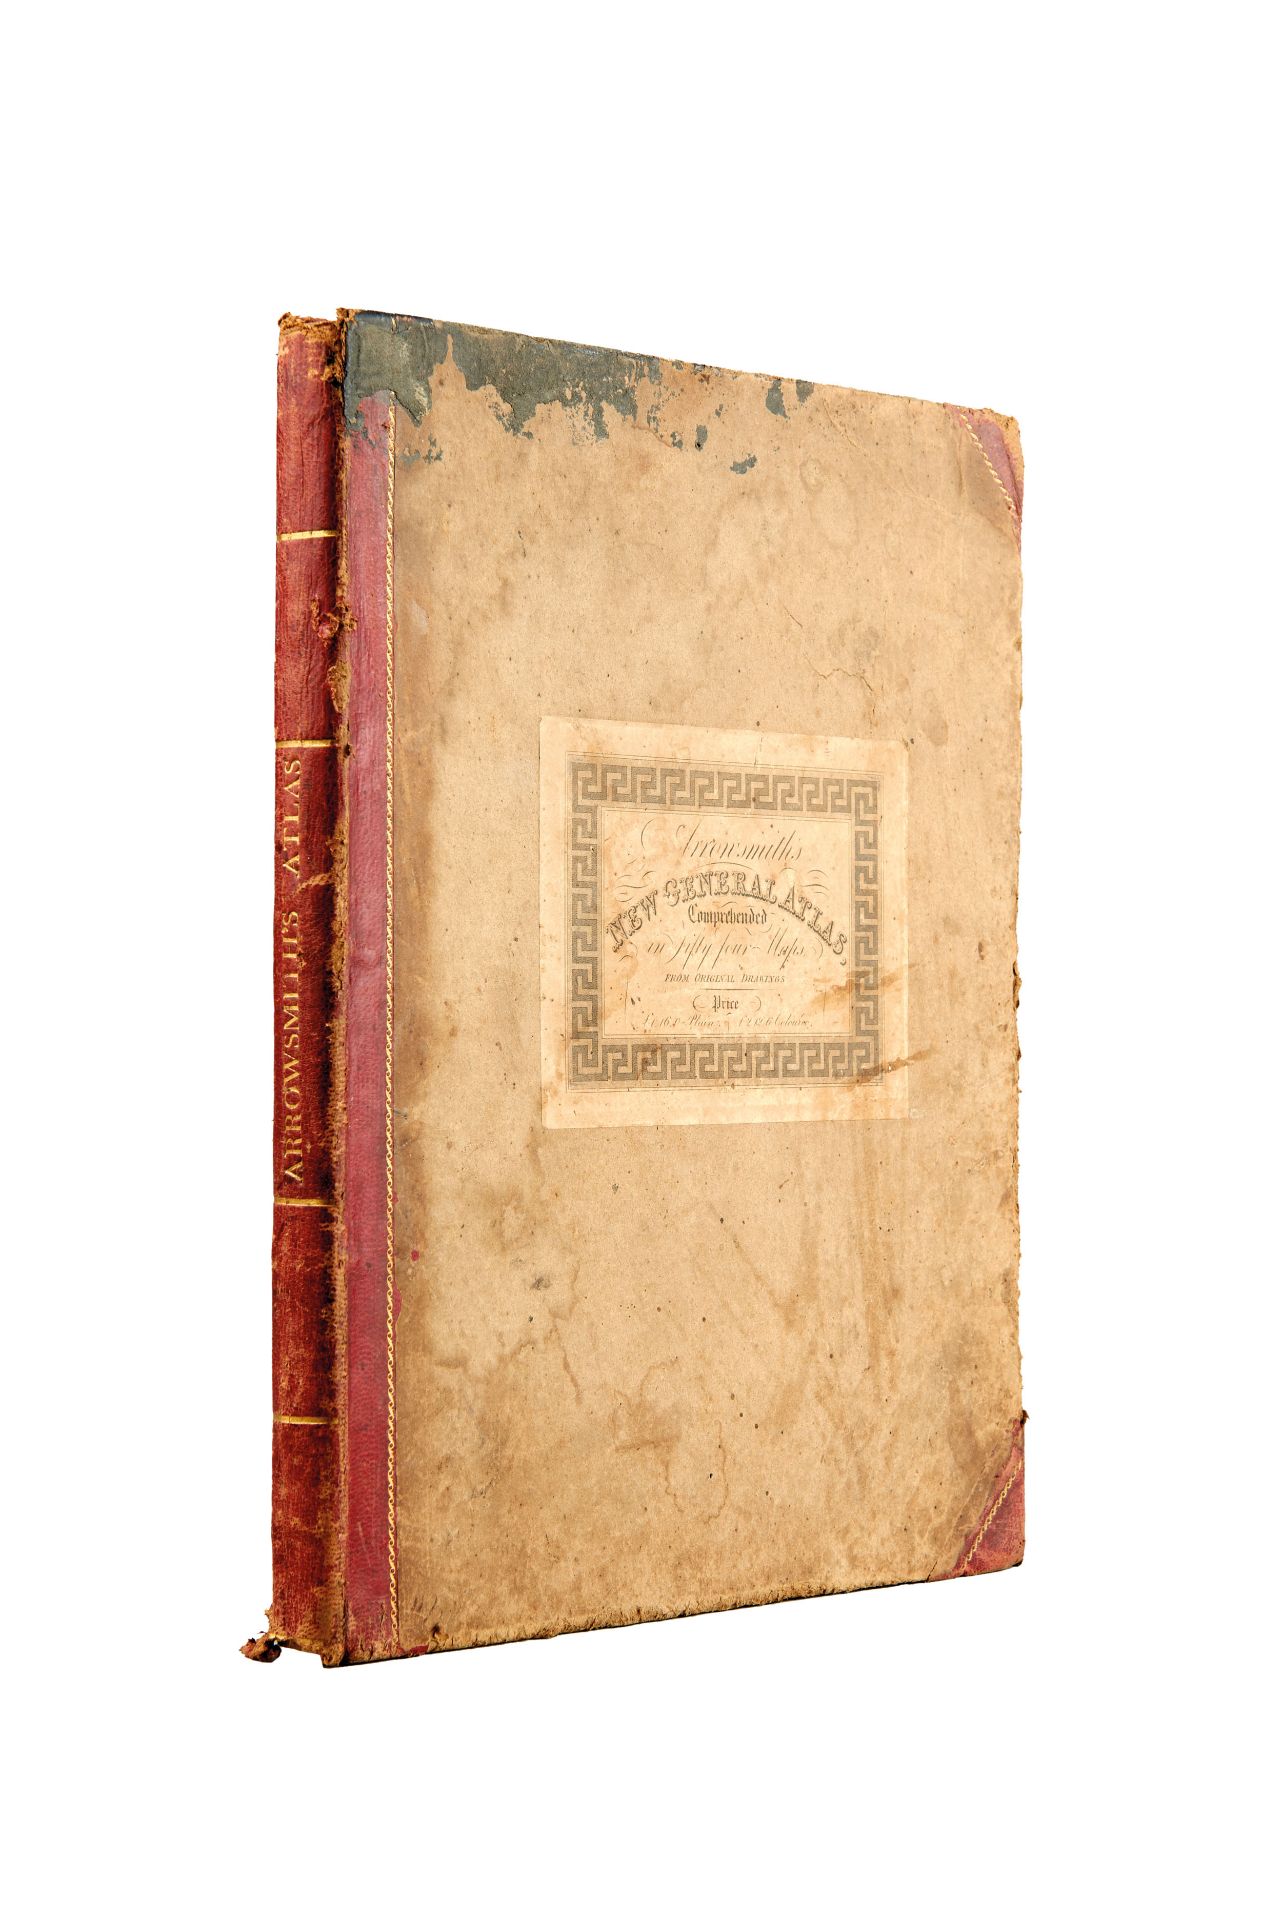 ARROWSMITH, Aaron (1750-1823). A new general atlas. London: Longman, Rees, Orme, Brown & Green, - Image 2 of 2